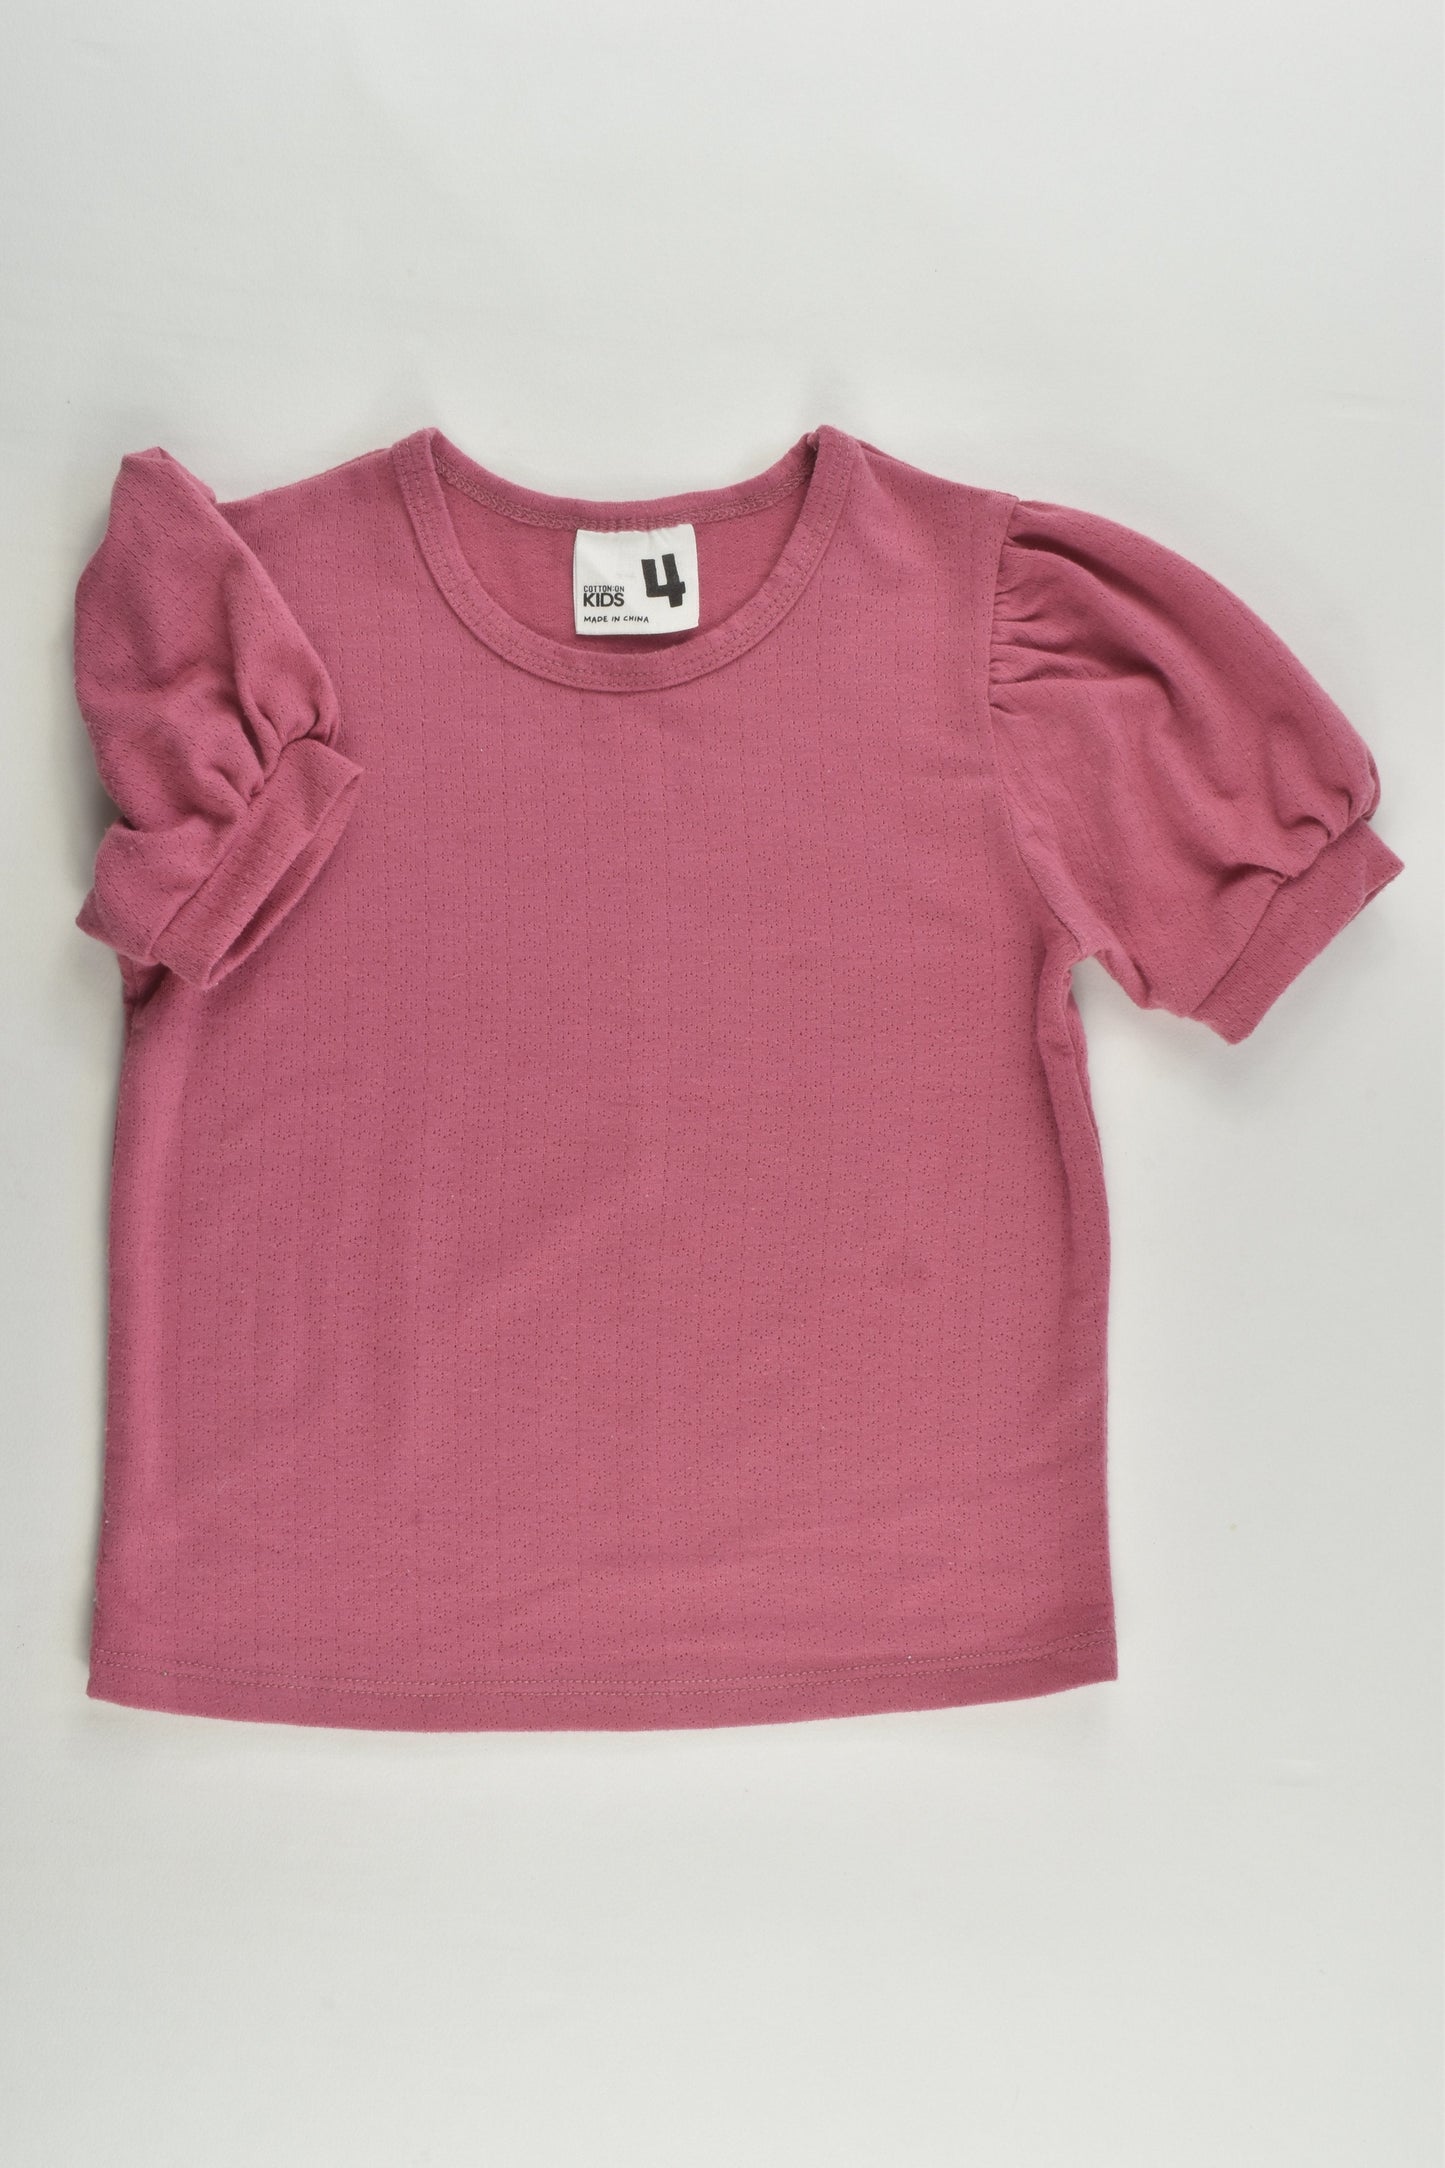 Cotton On Kids Size 4 T-shirt